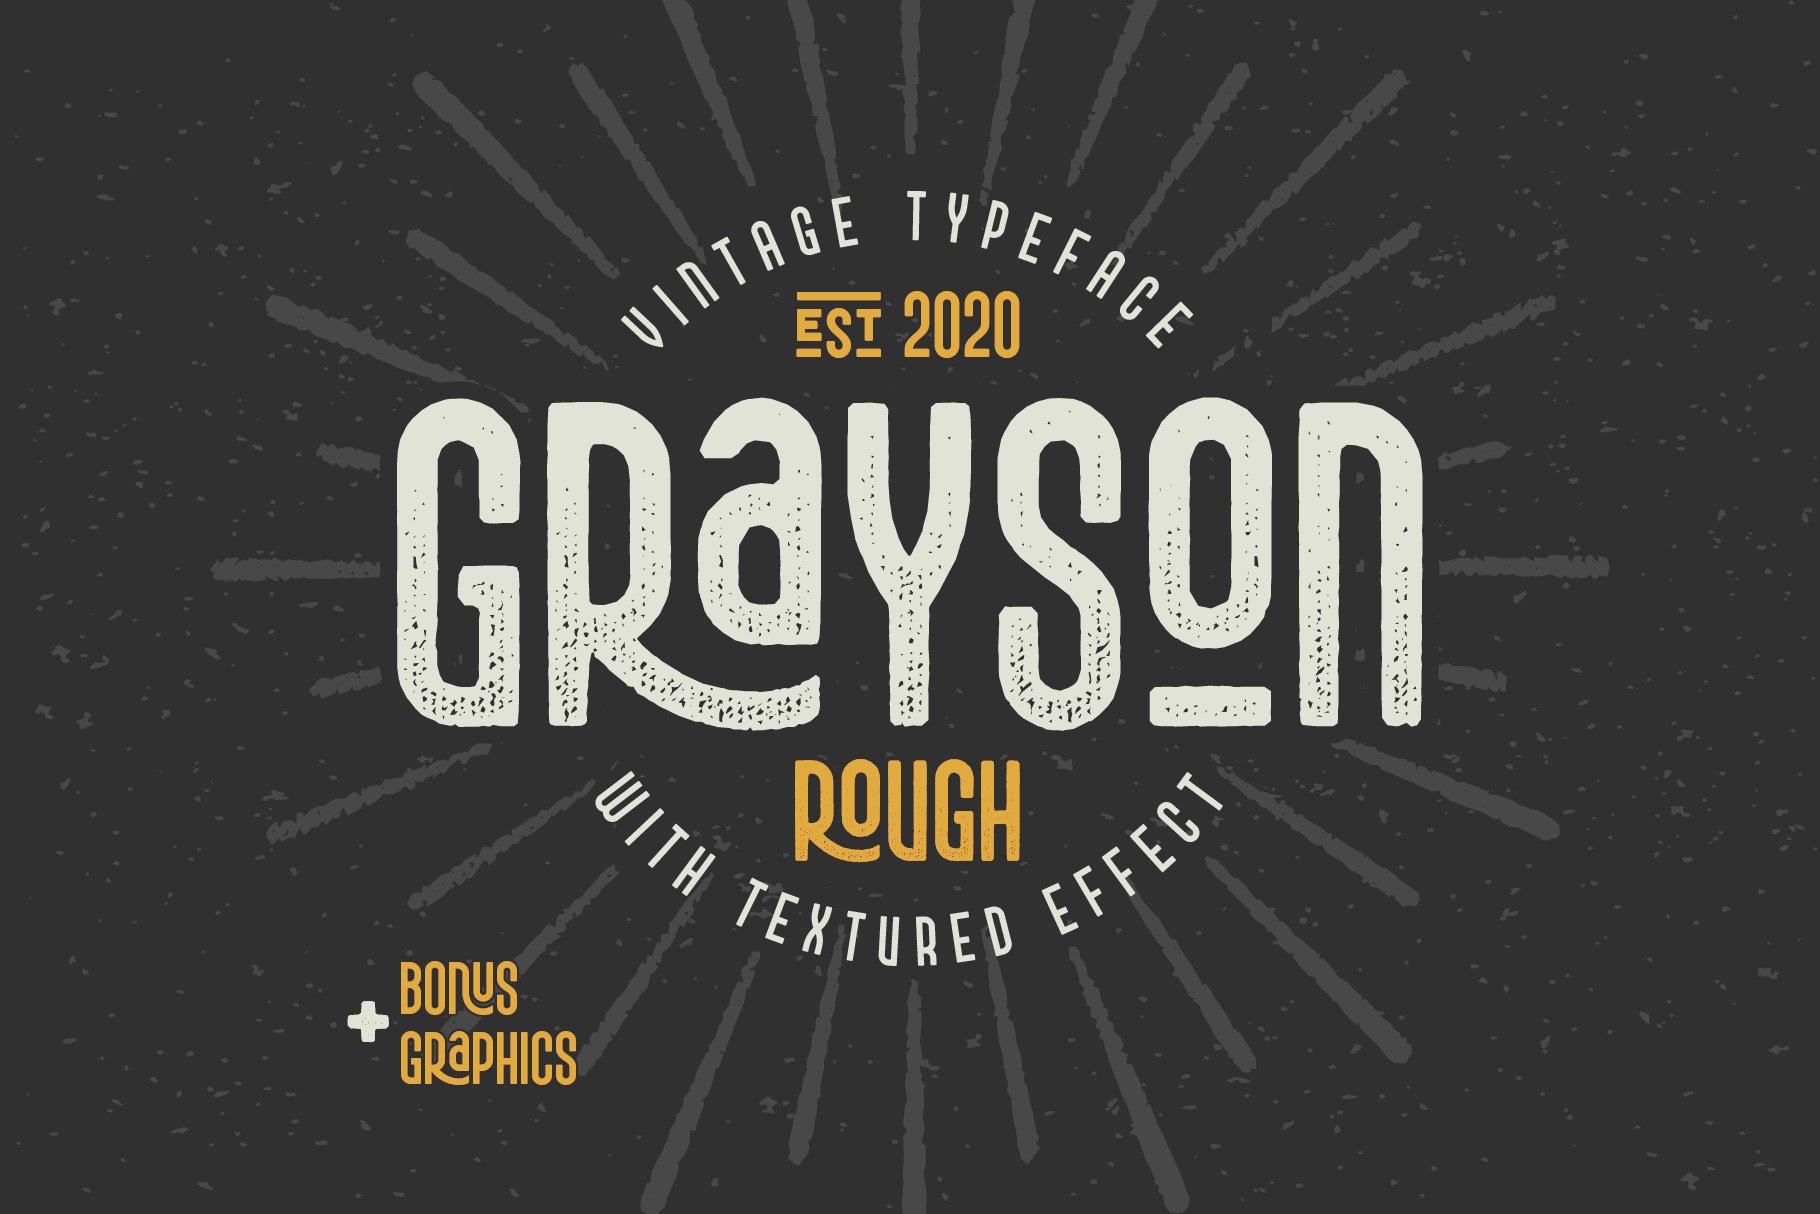 grayson rough 01 973